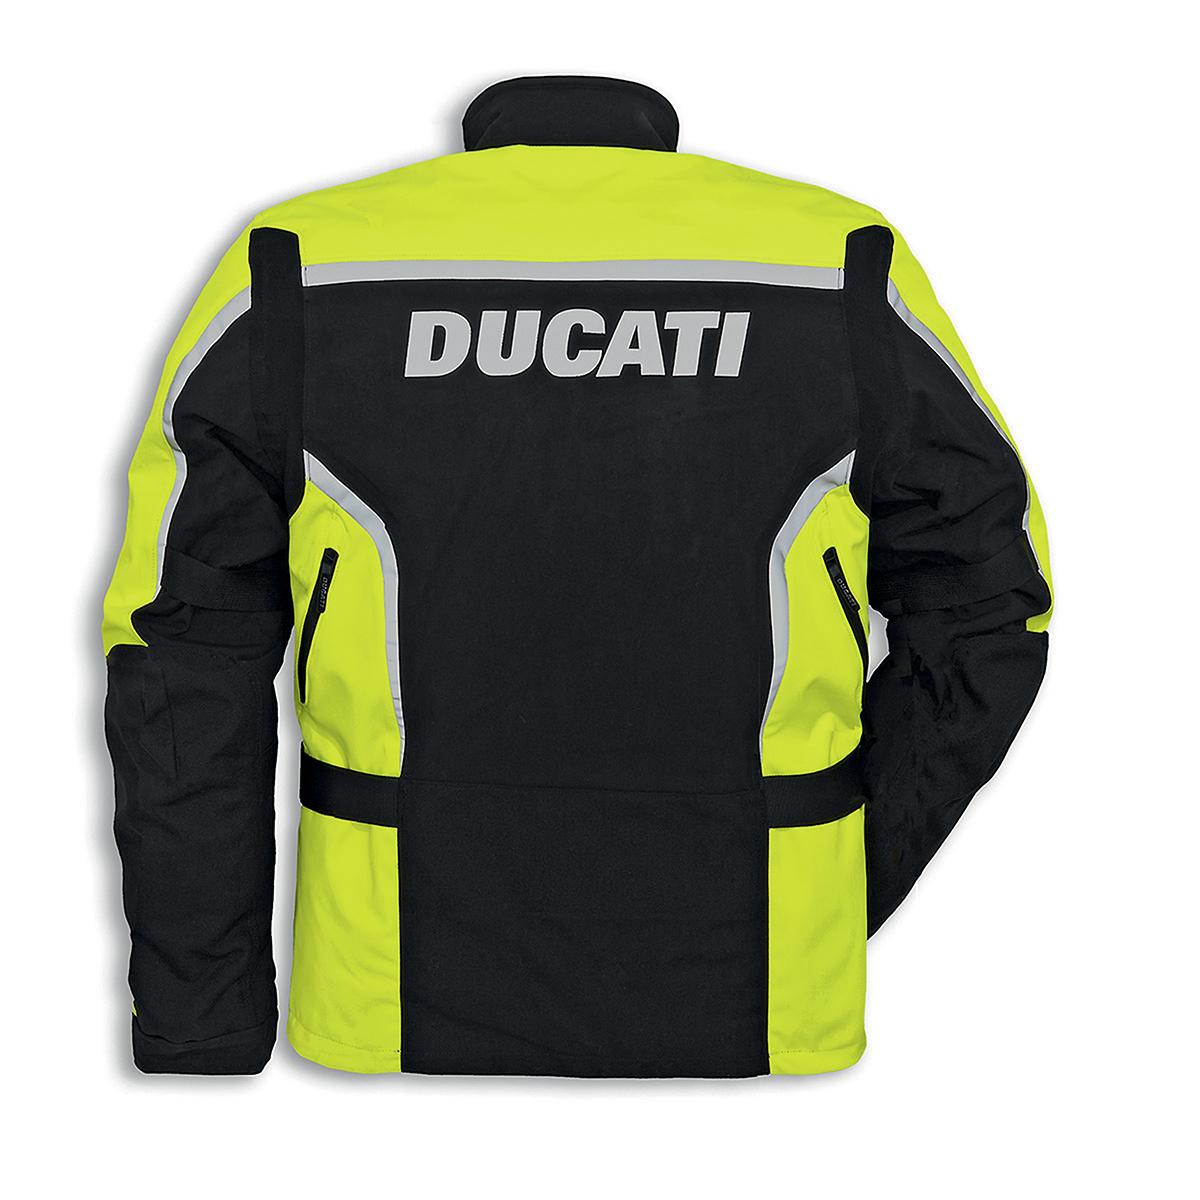 Ducati - Nuovi capi Arai e Rev'it!